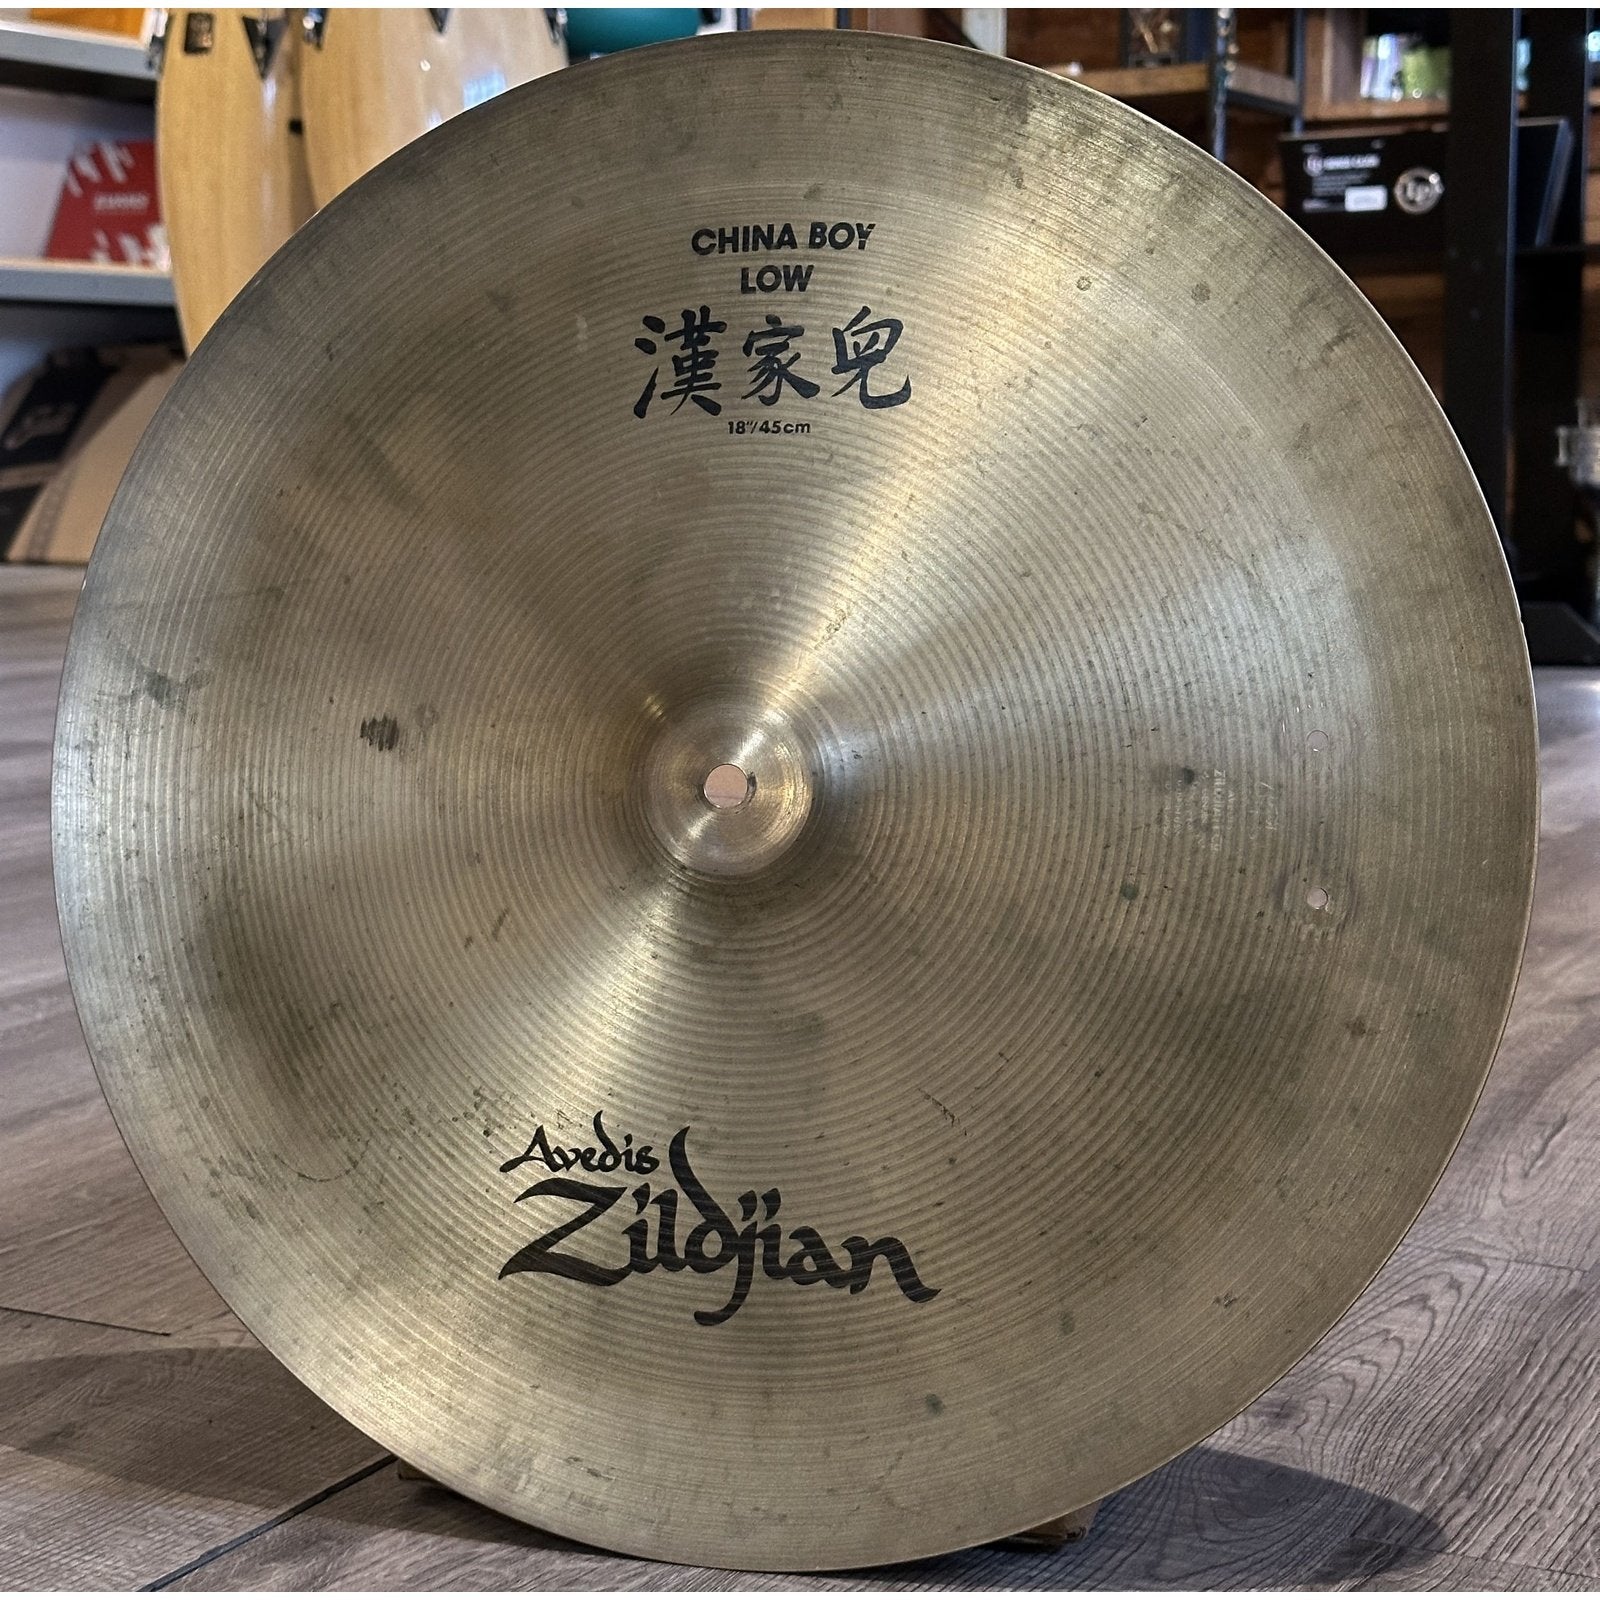 Used Zildjian China Boy Low Cymbal 18